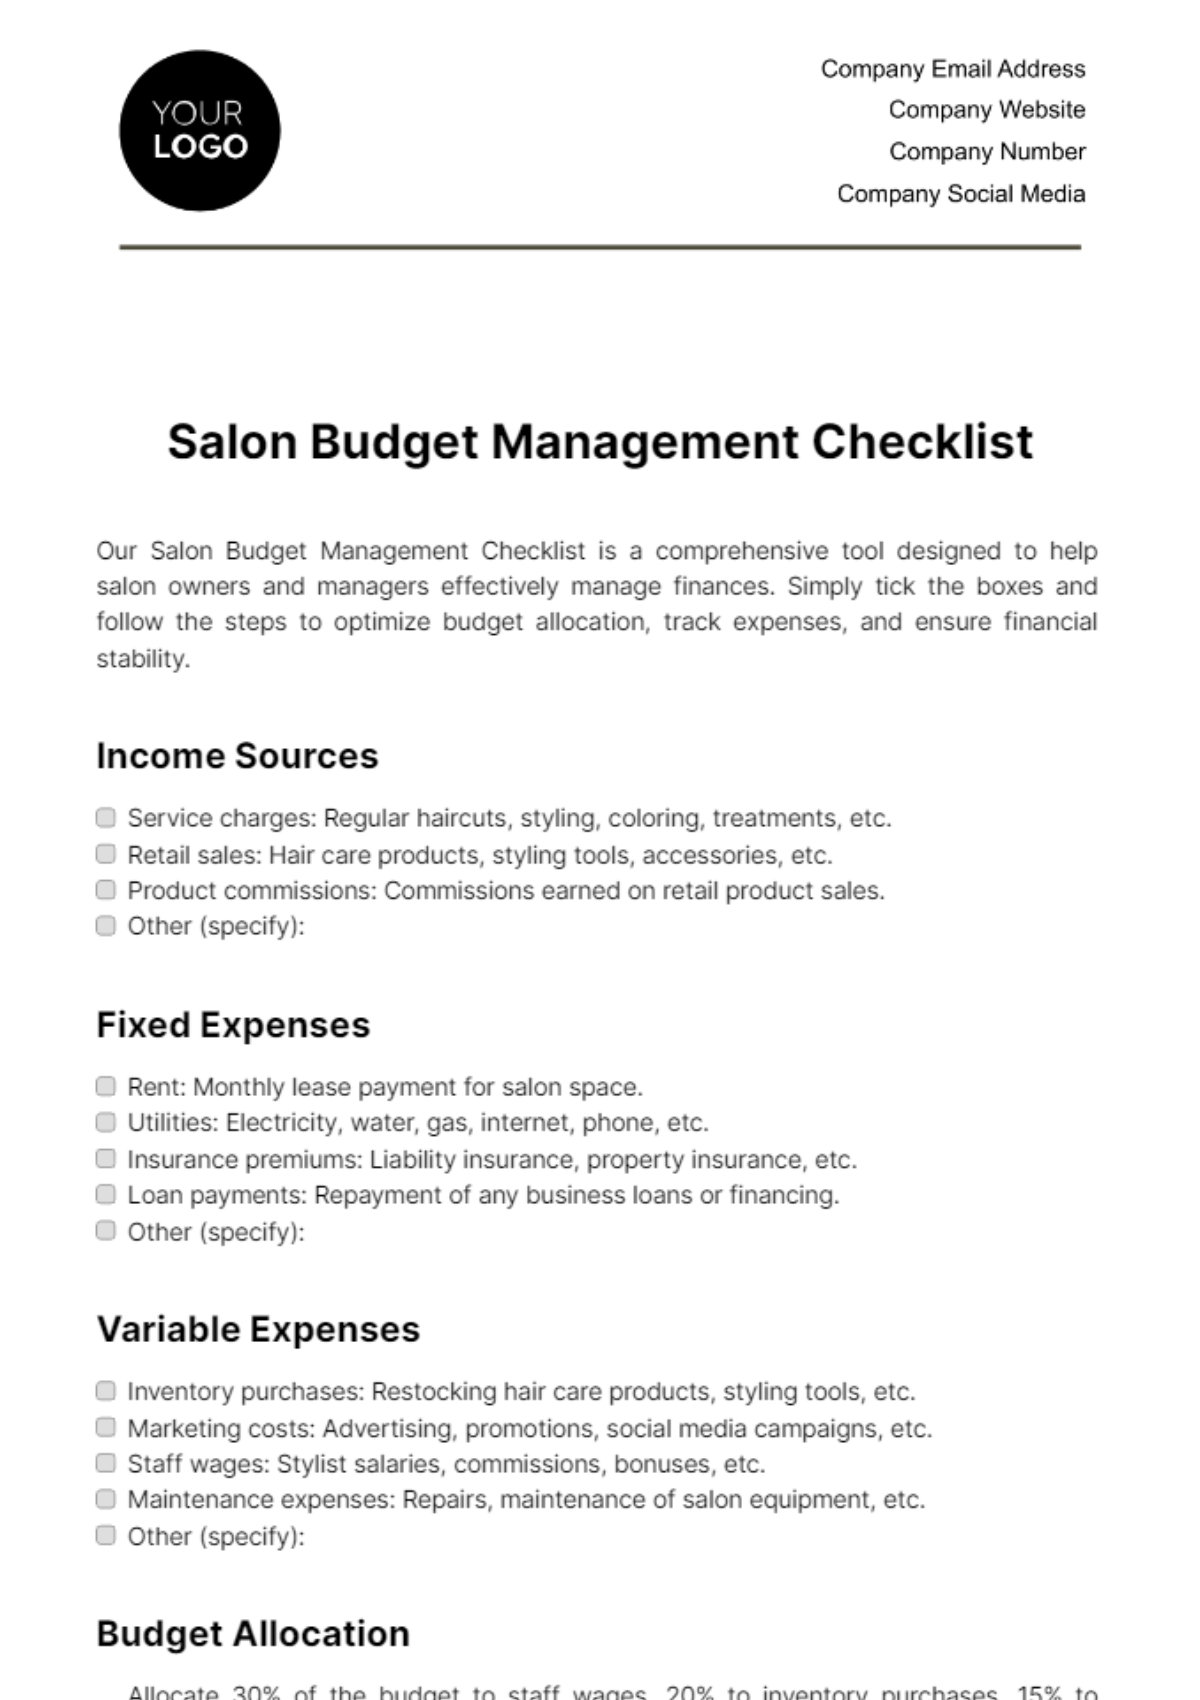 Salon Budget Management Checklist Template